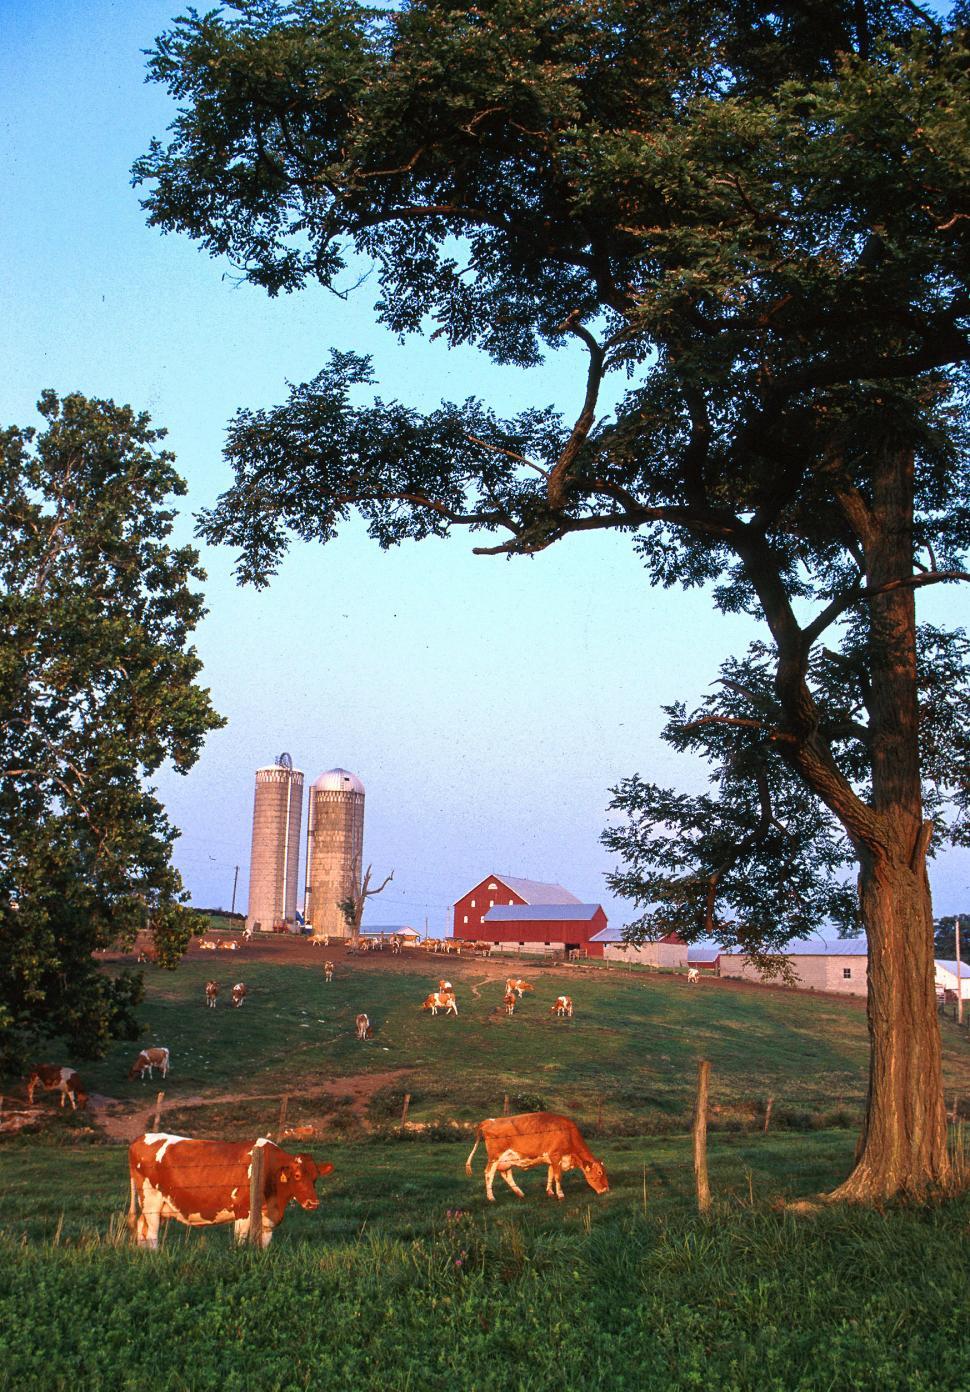 Free Image of Dairy Farm 